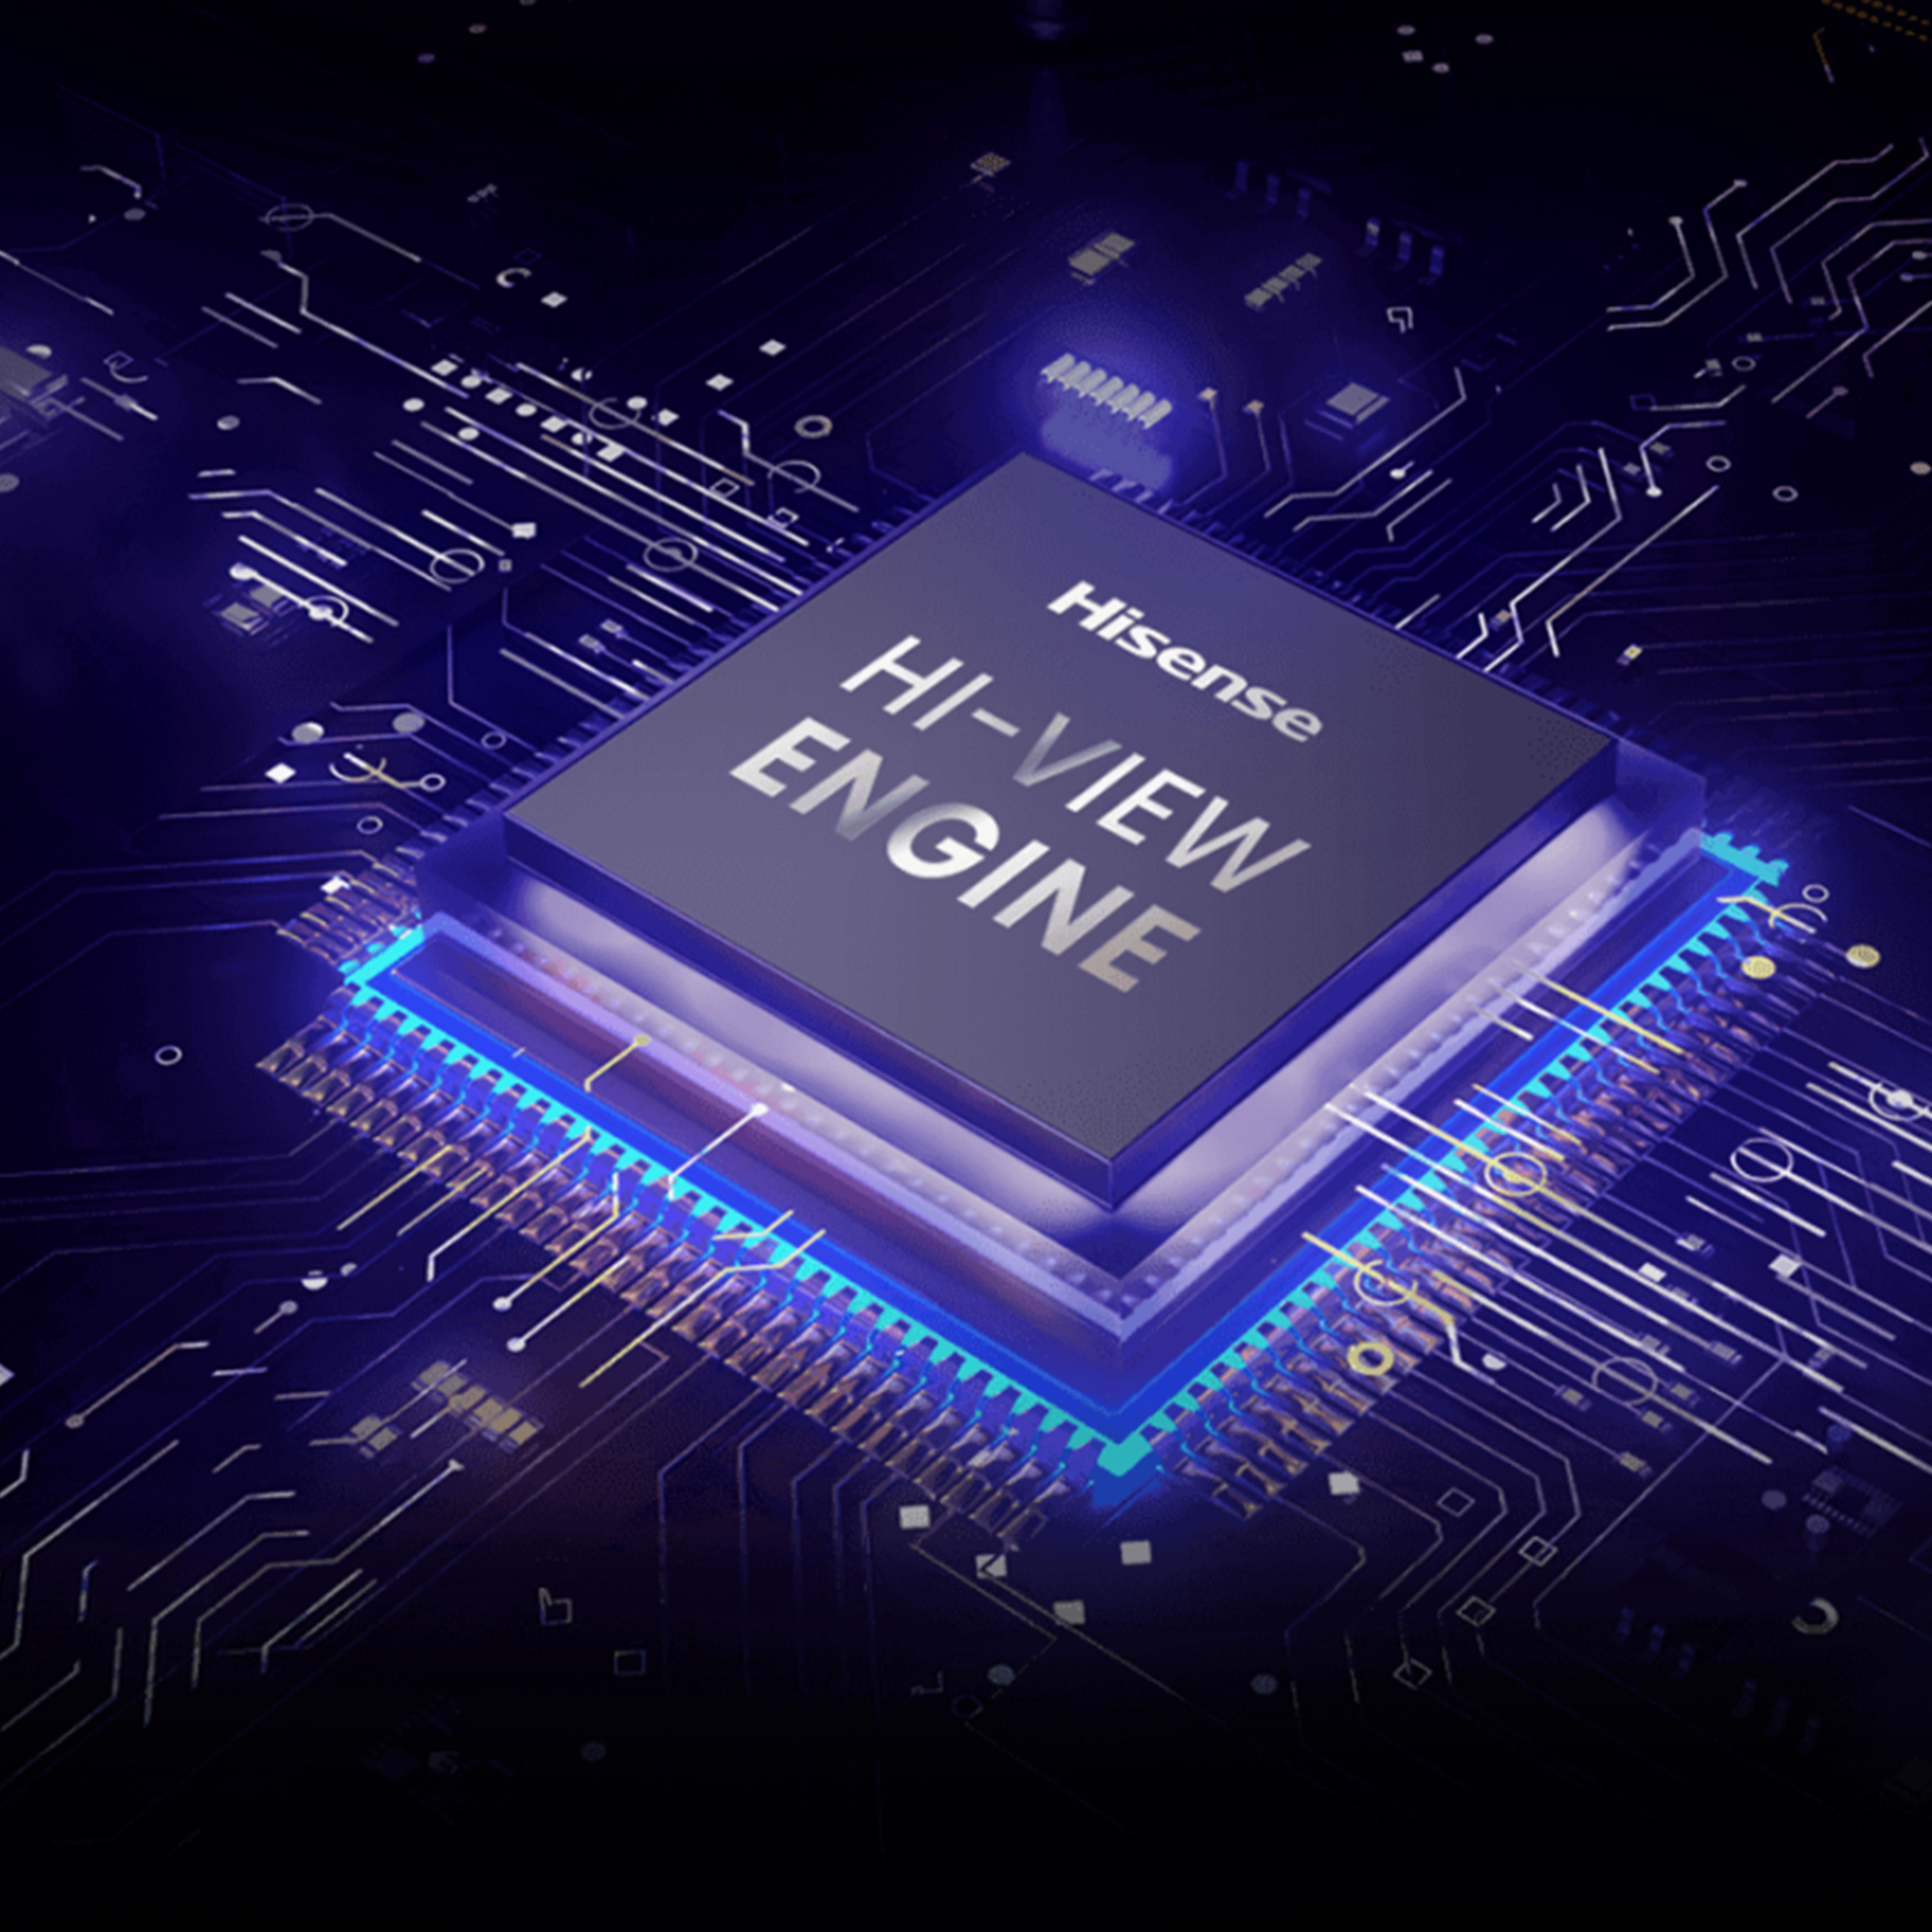 Hisense's Image Quality Chip Technology